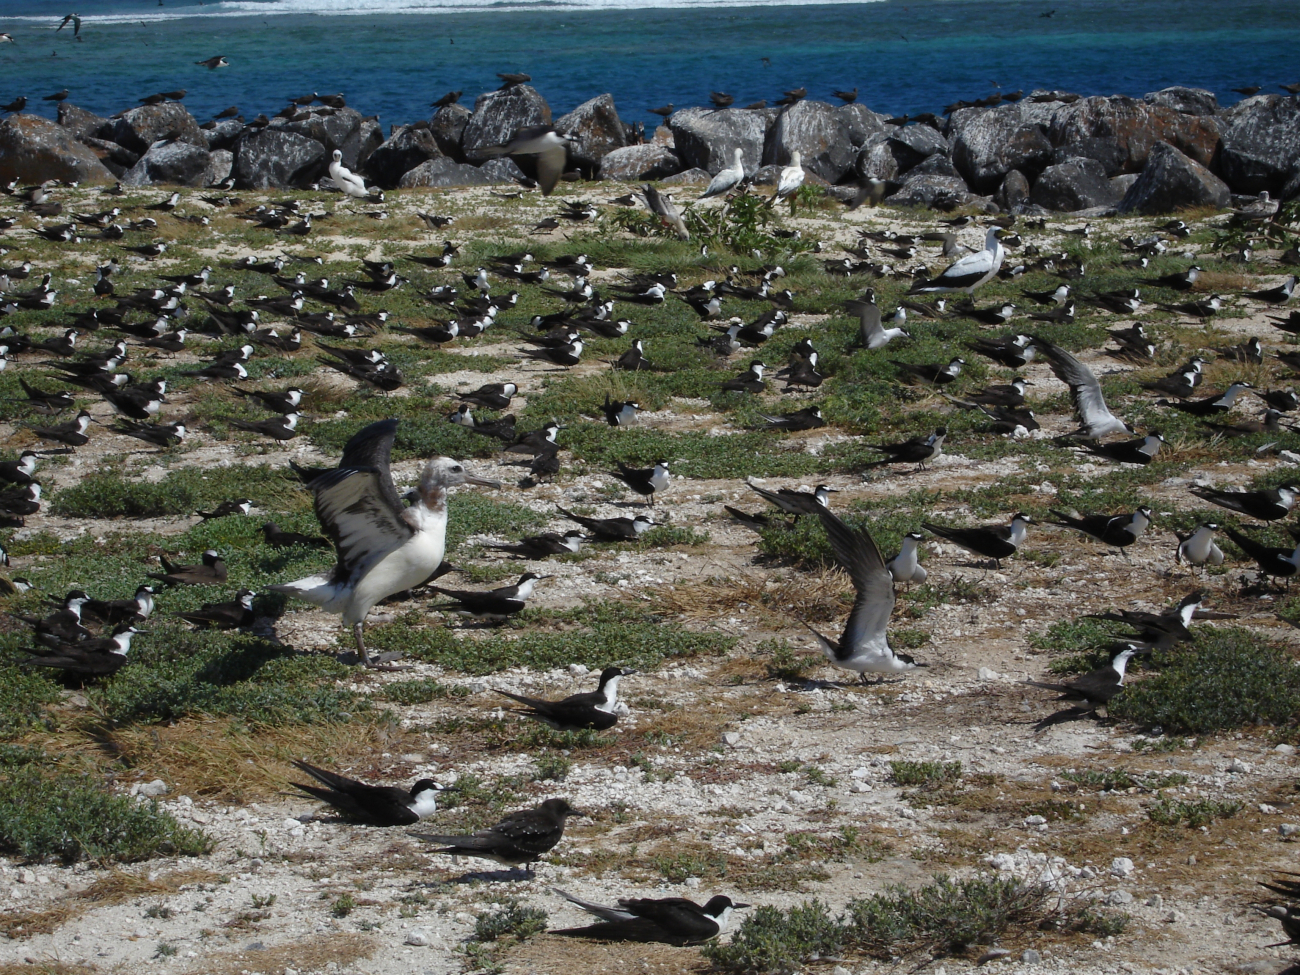 An albatross, sooty terns, and boobies